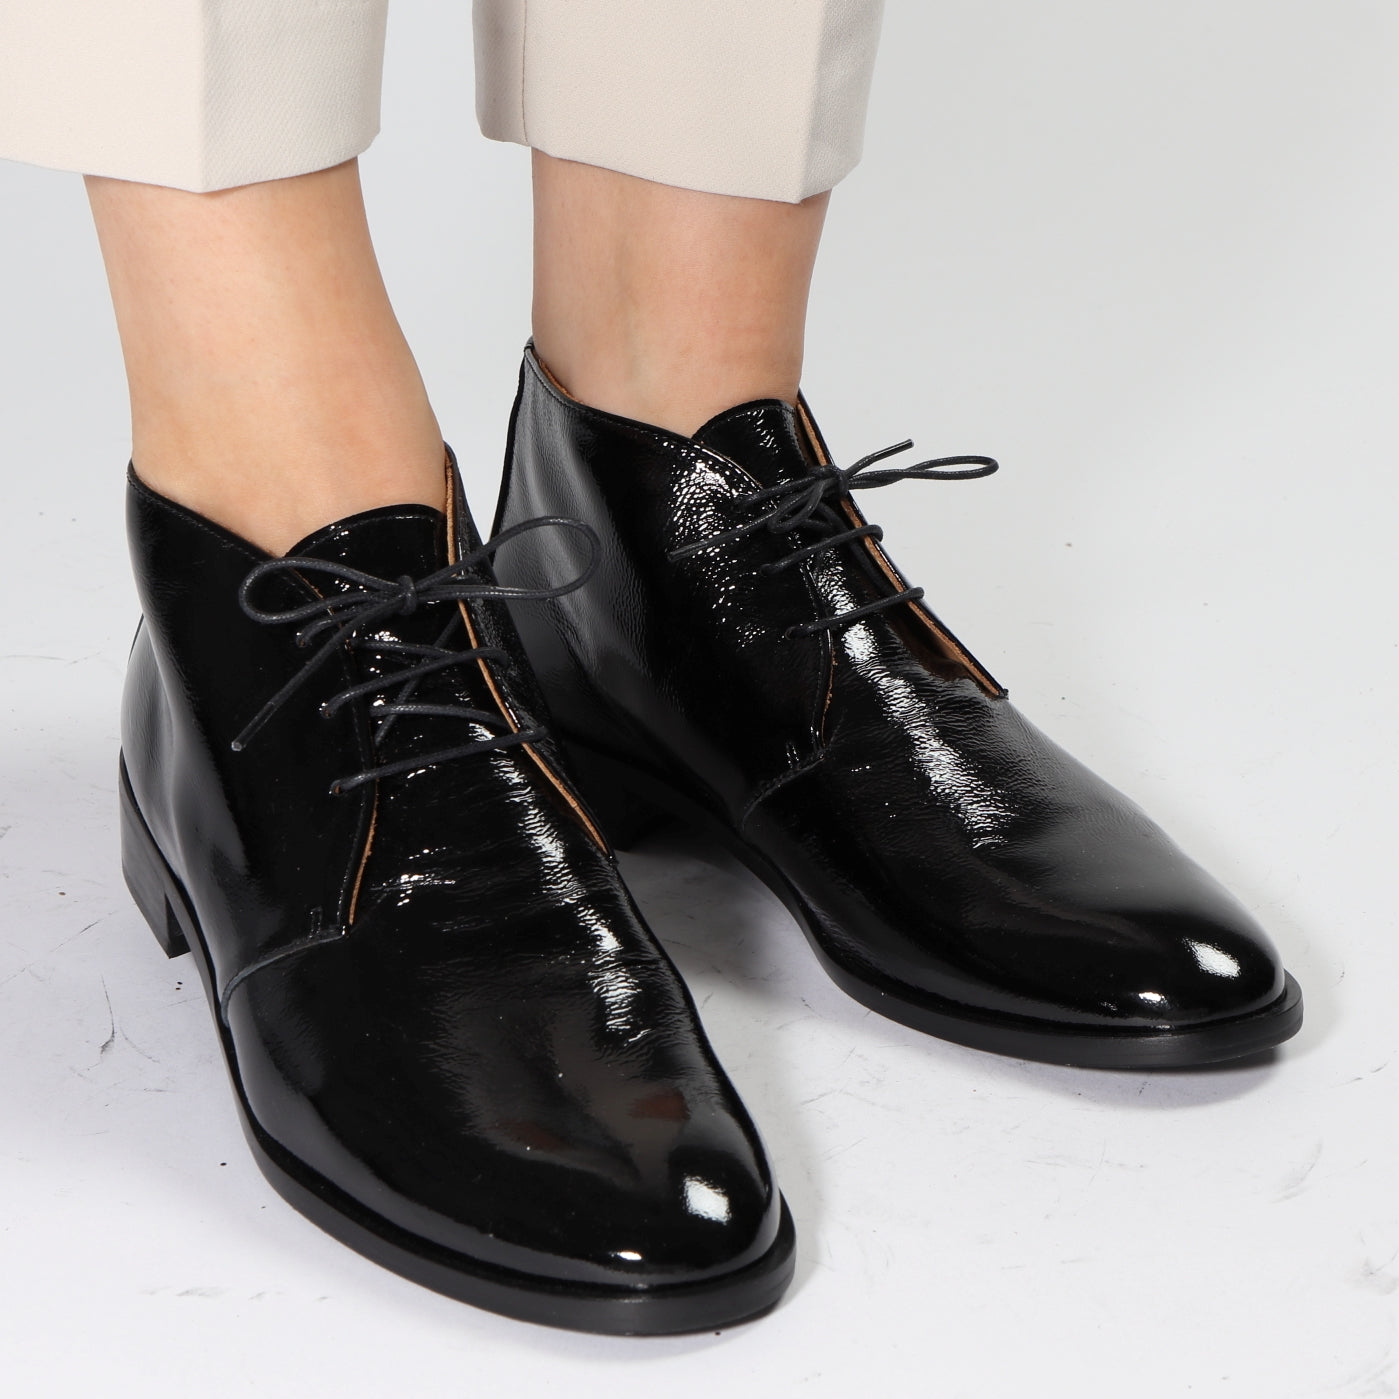 Parson Wrinkle Black - Emma Go Shoes